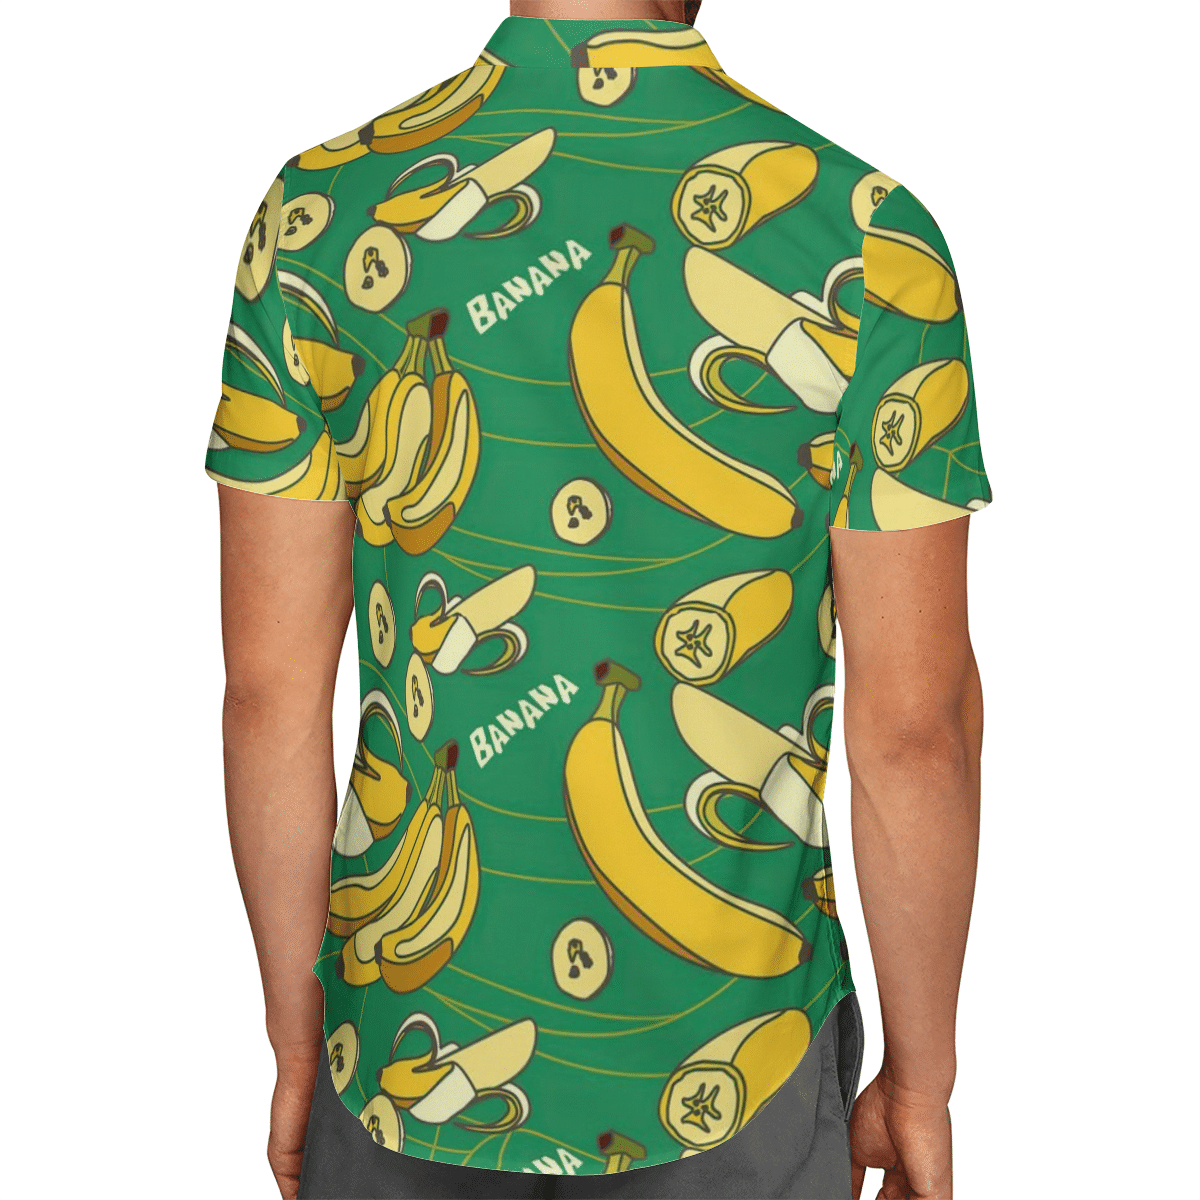 Fitness Banana Mag Hawaiian Shirts – thighhuggers